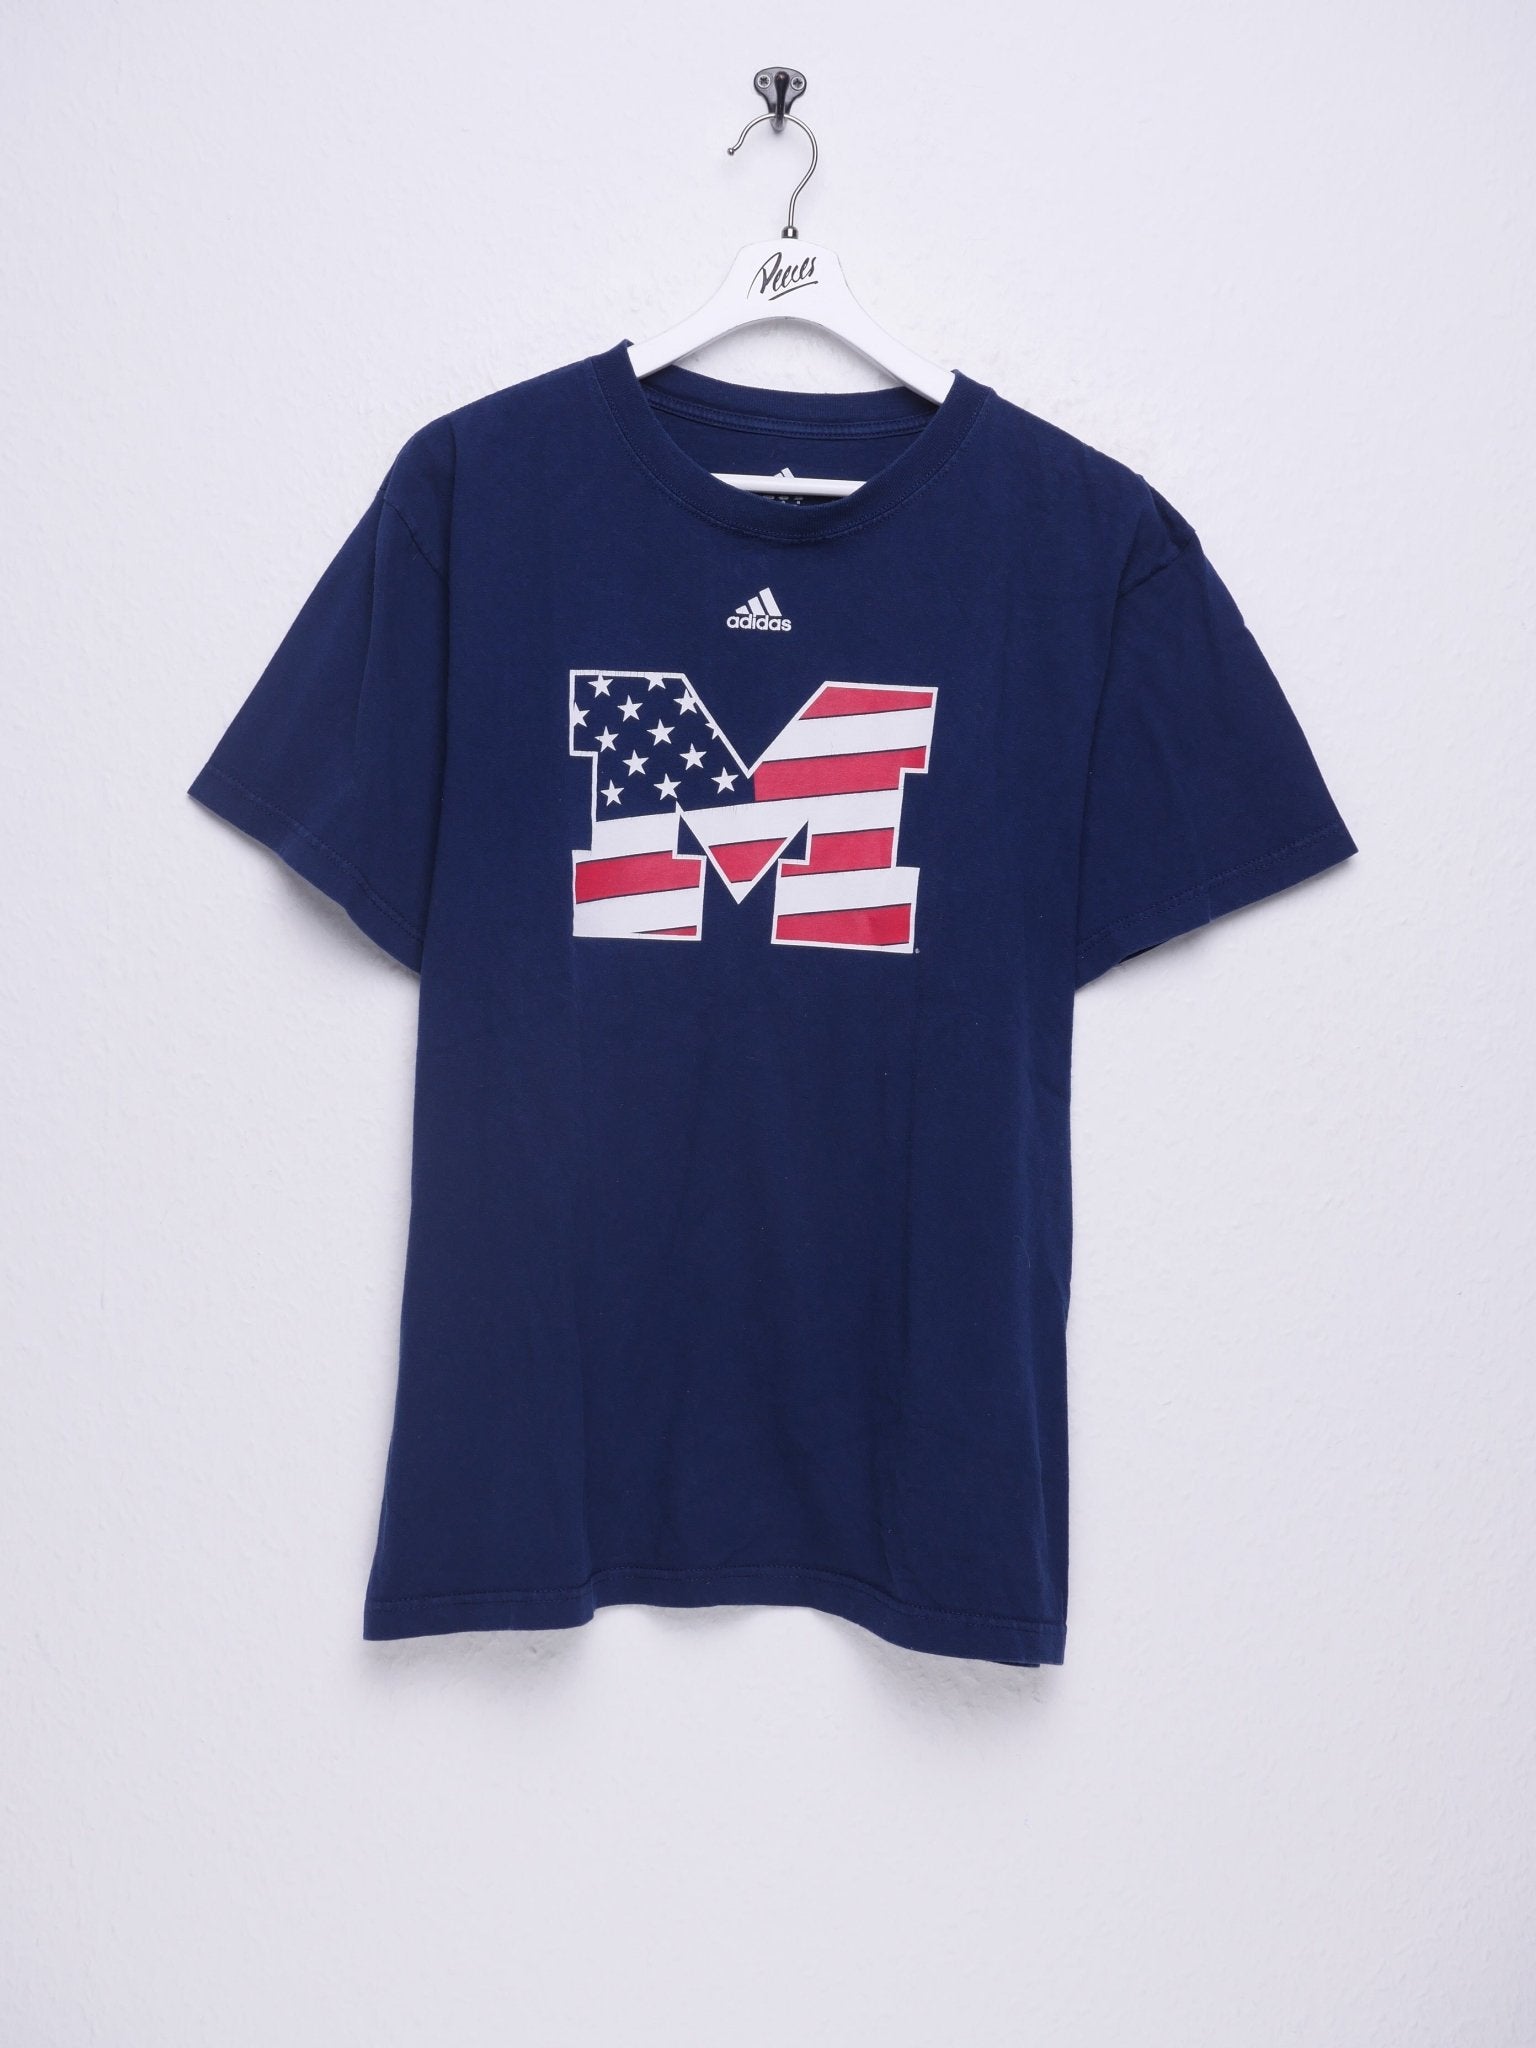 Adidas USA Flag printed Middle Logo navy Shirt - Peeces